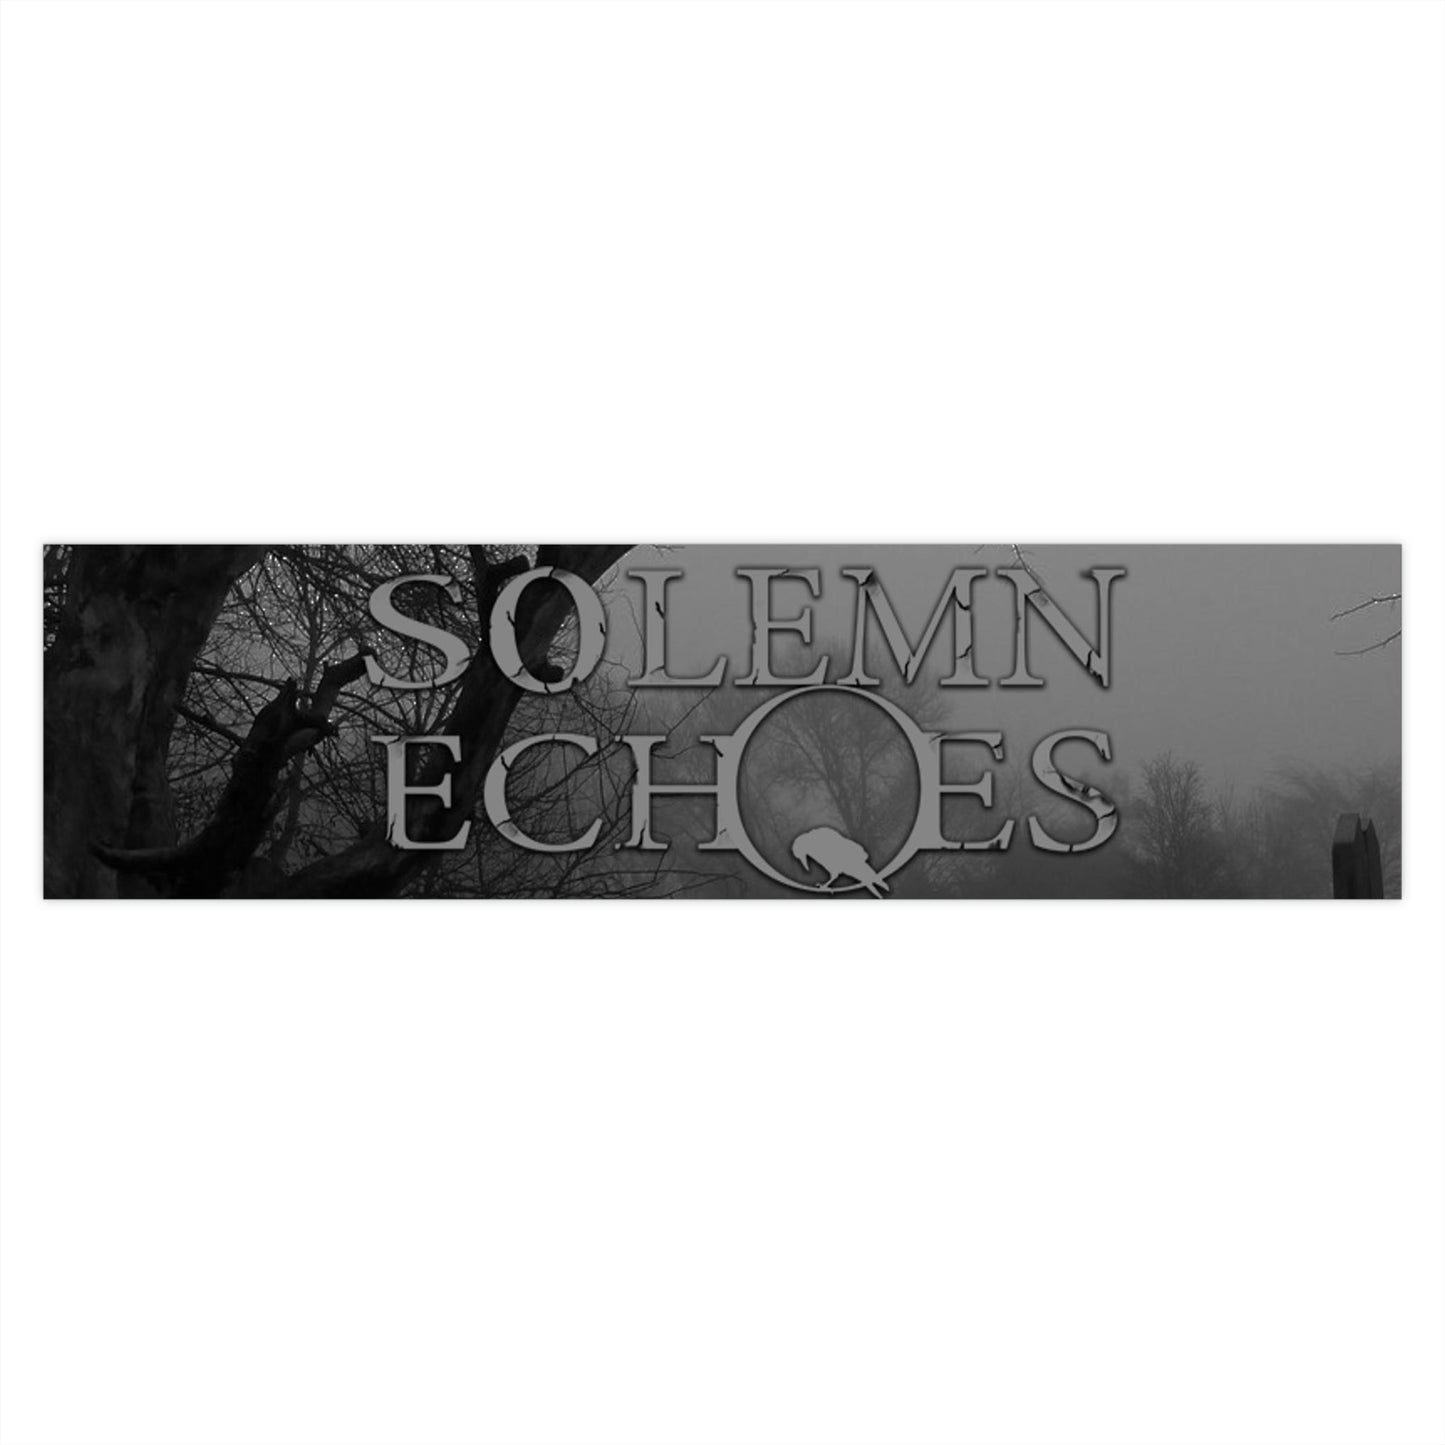 Solemn Echoes - Bumper Sticker (Australia)